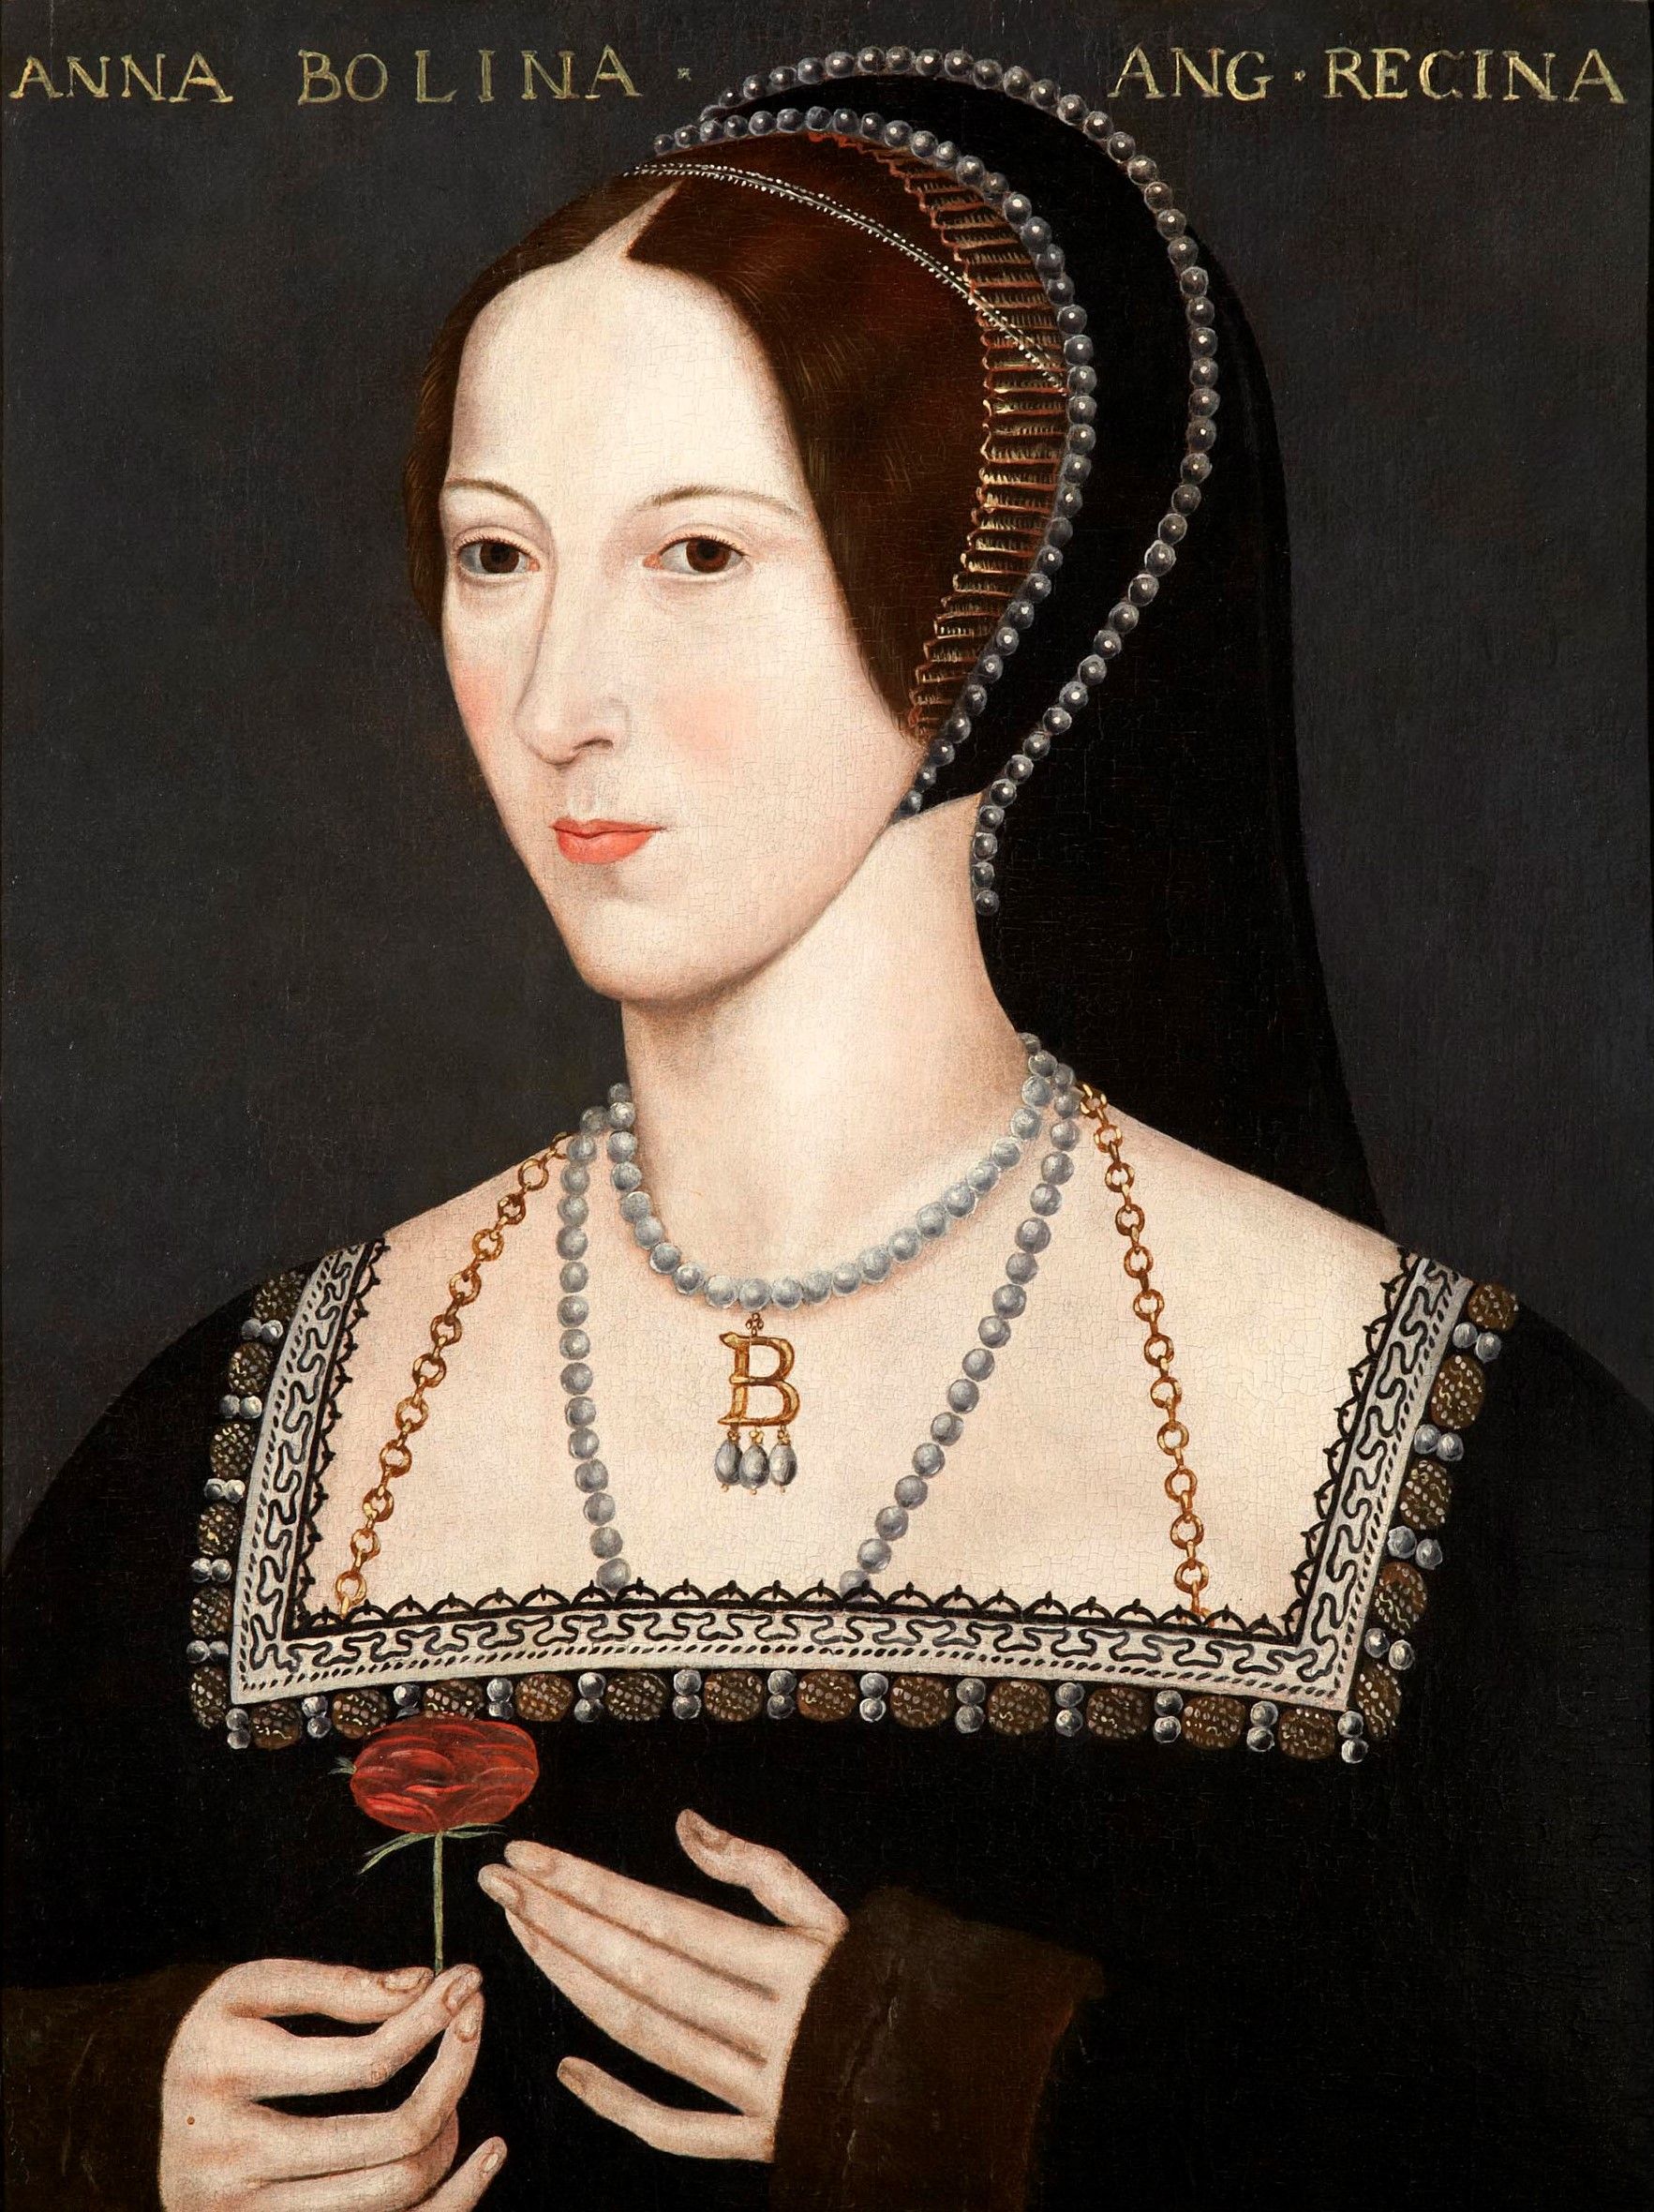 Anne Boleyn, second wife of King Henry VIII wearing her initial necklace, c.1550 Hever Castle.